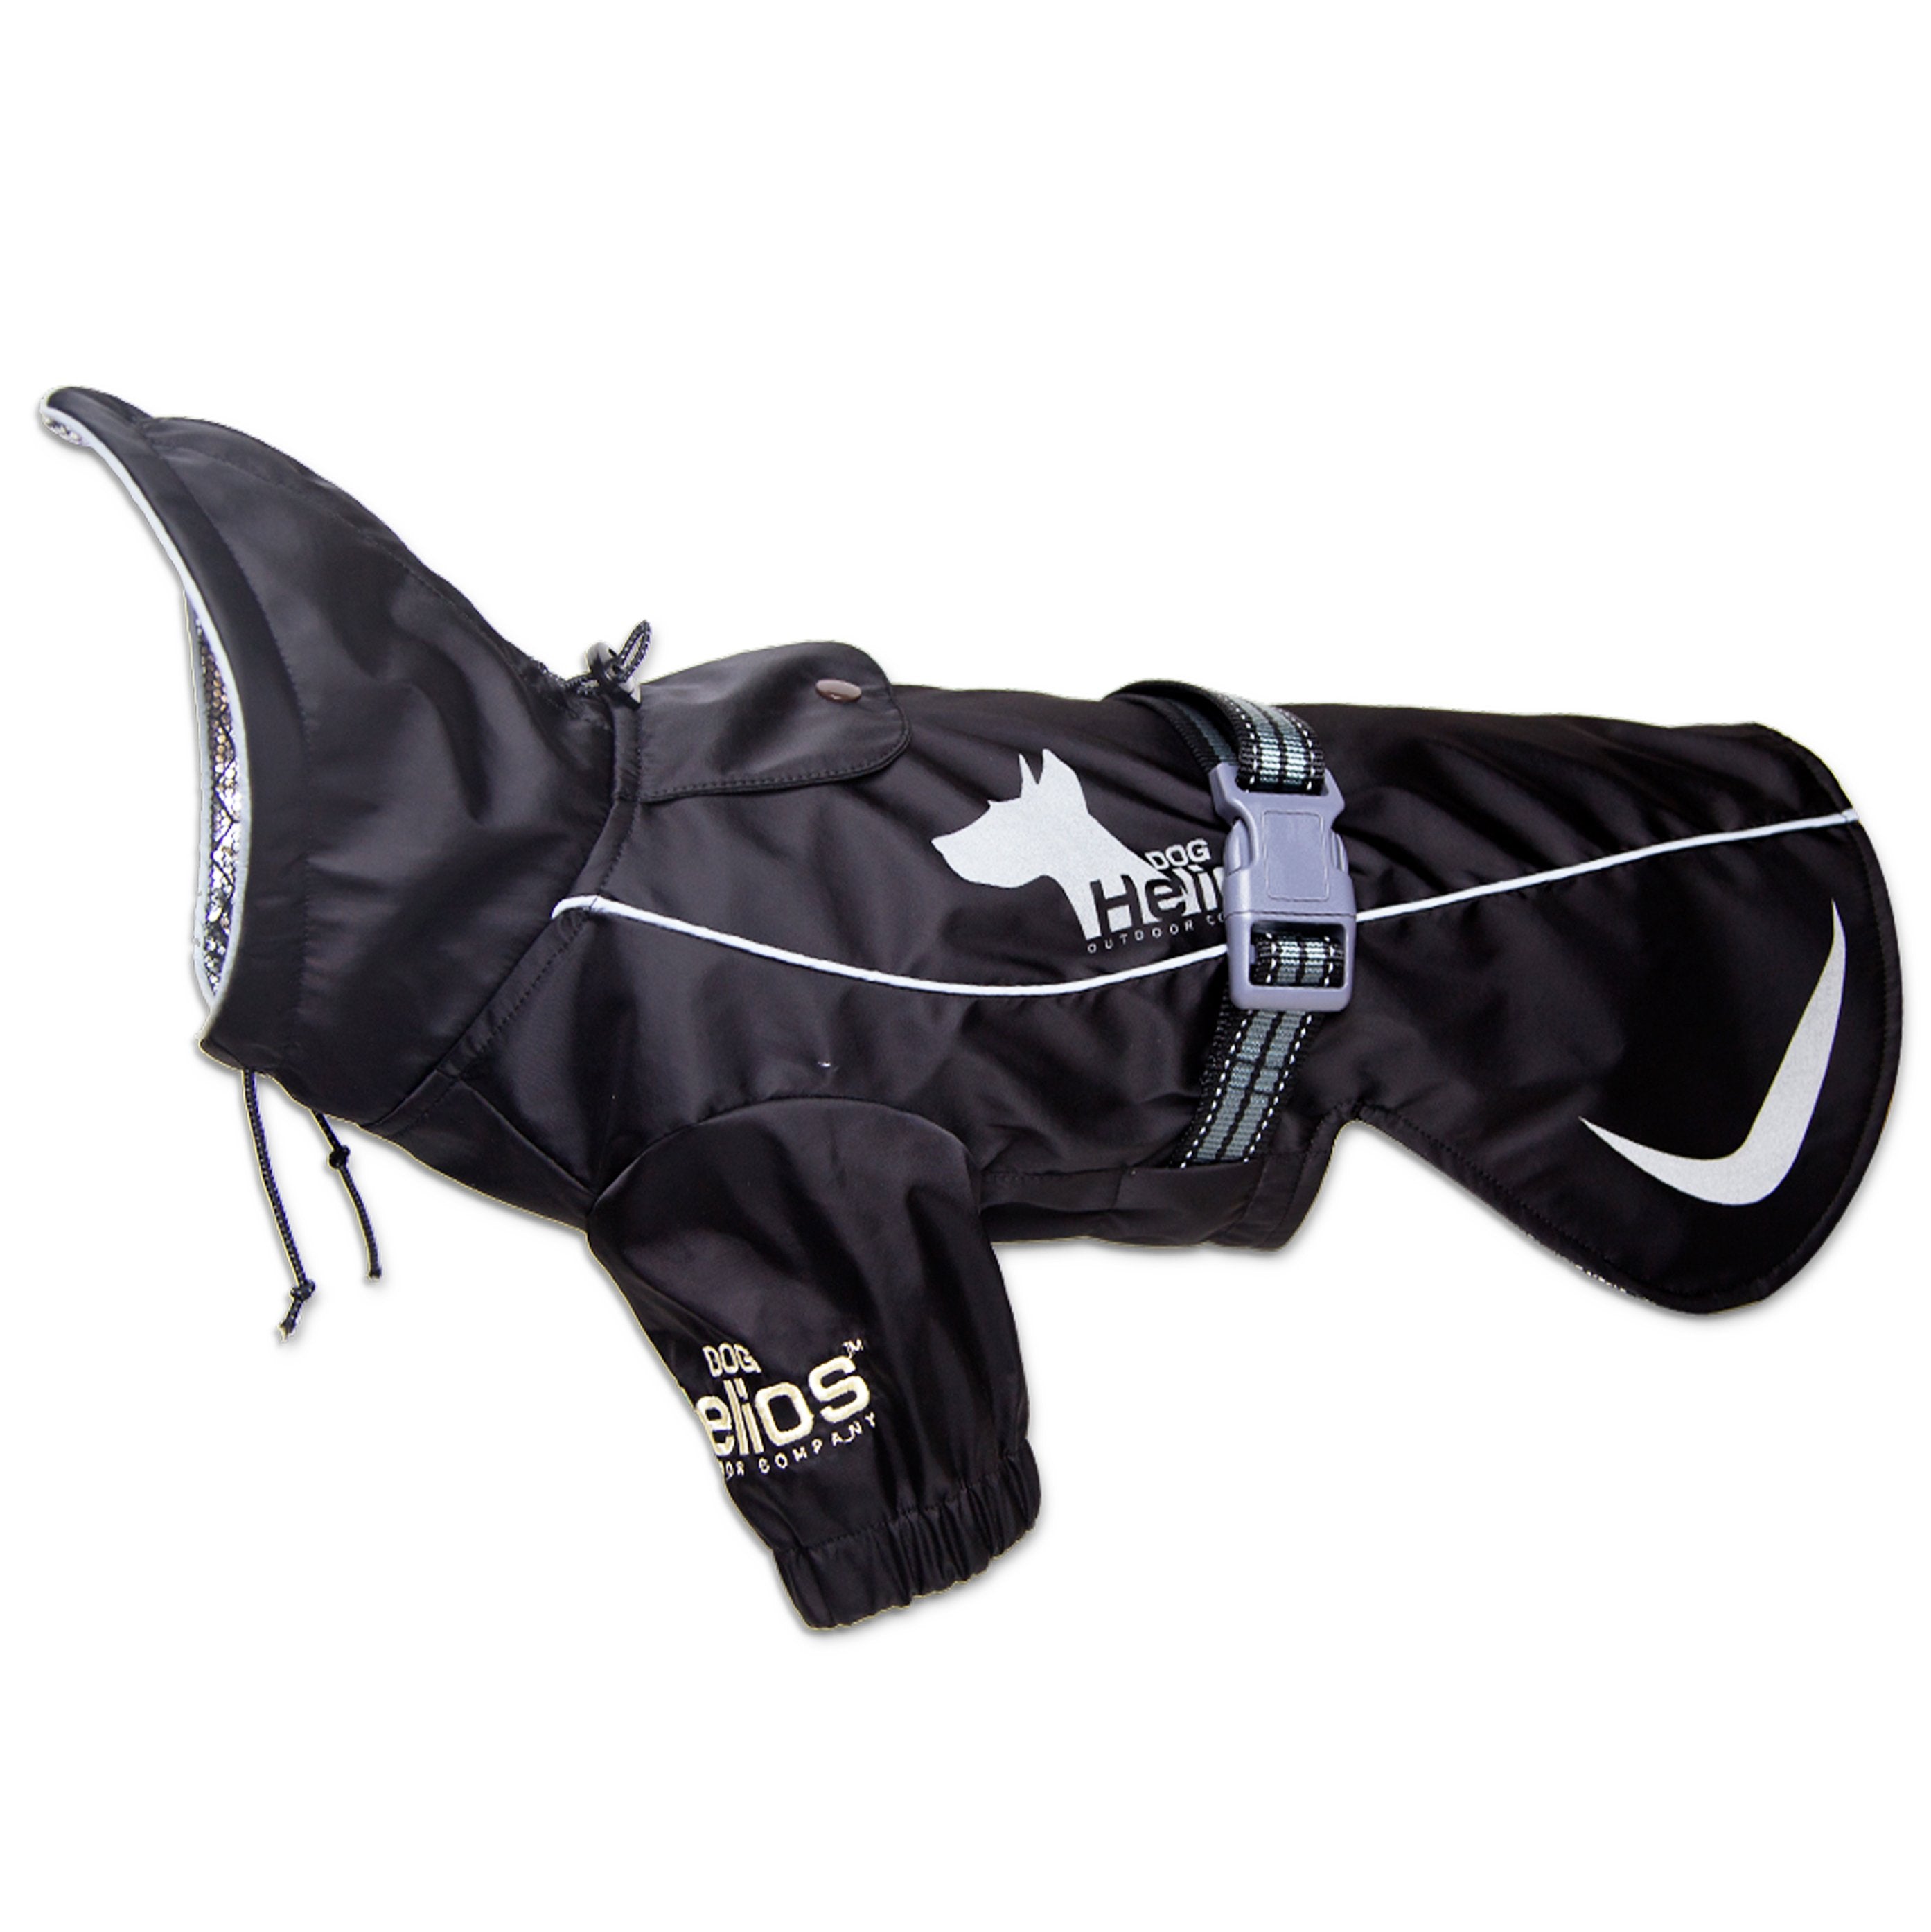 Dog Helios® 'Ice-Breaker' Hooded Dog Coat W/ Heat Reflective Tech - Black - Large